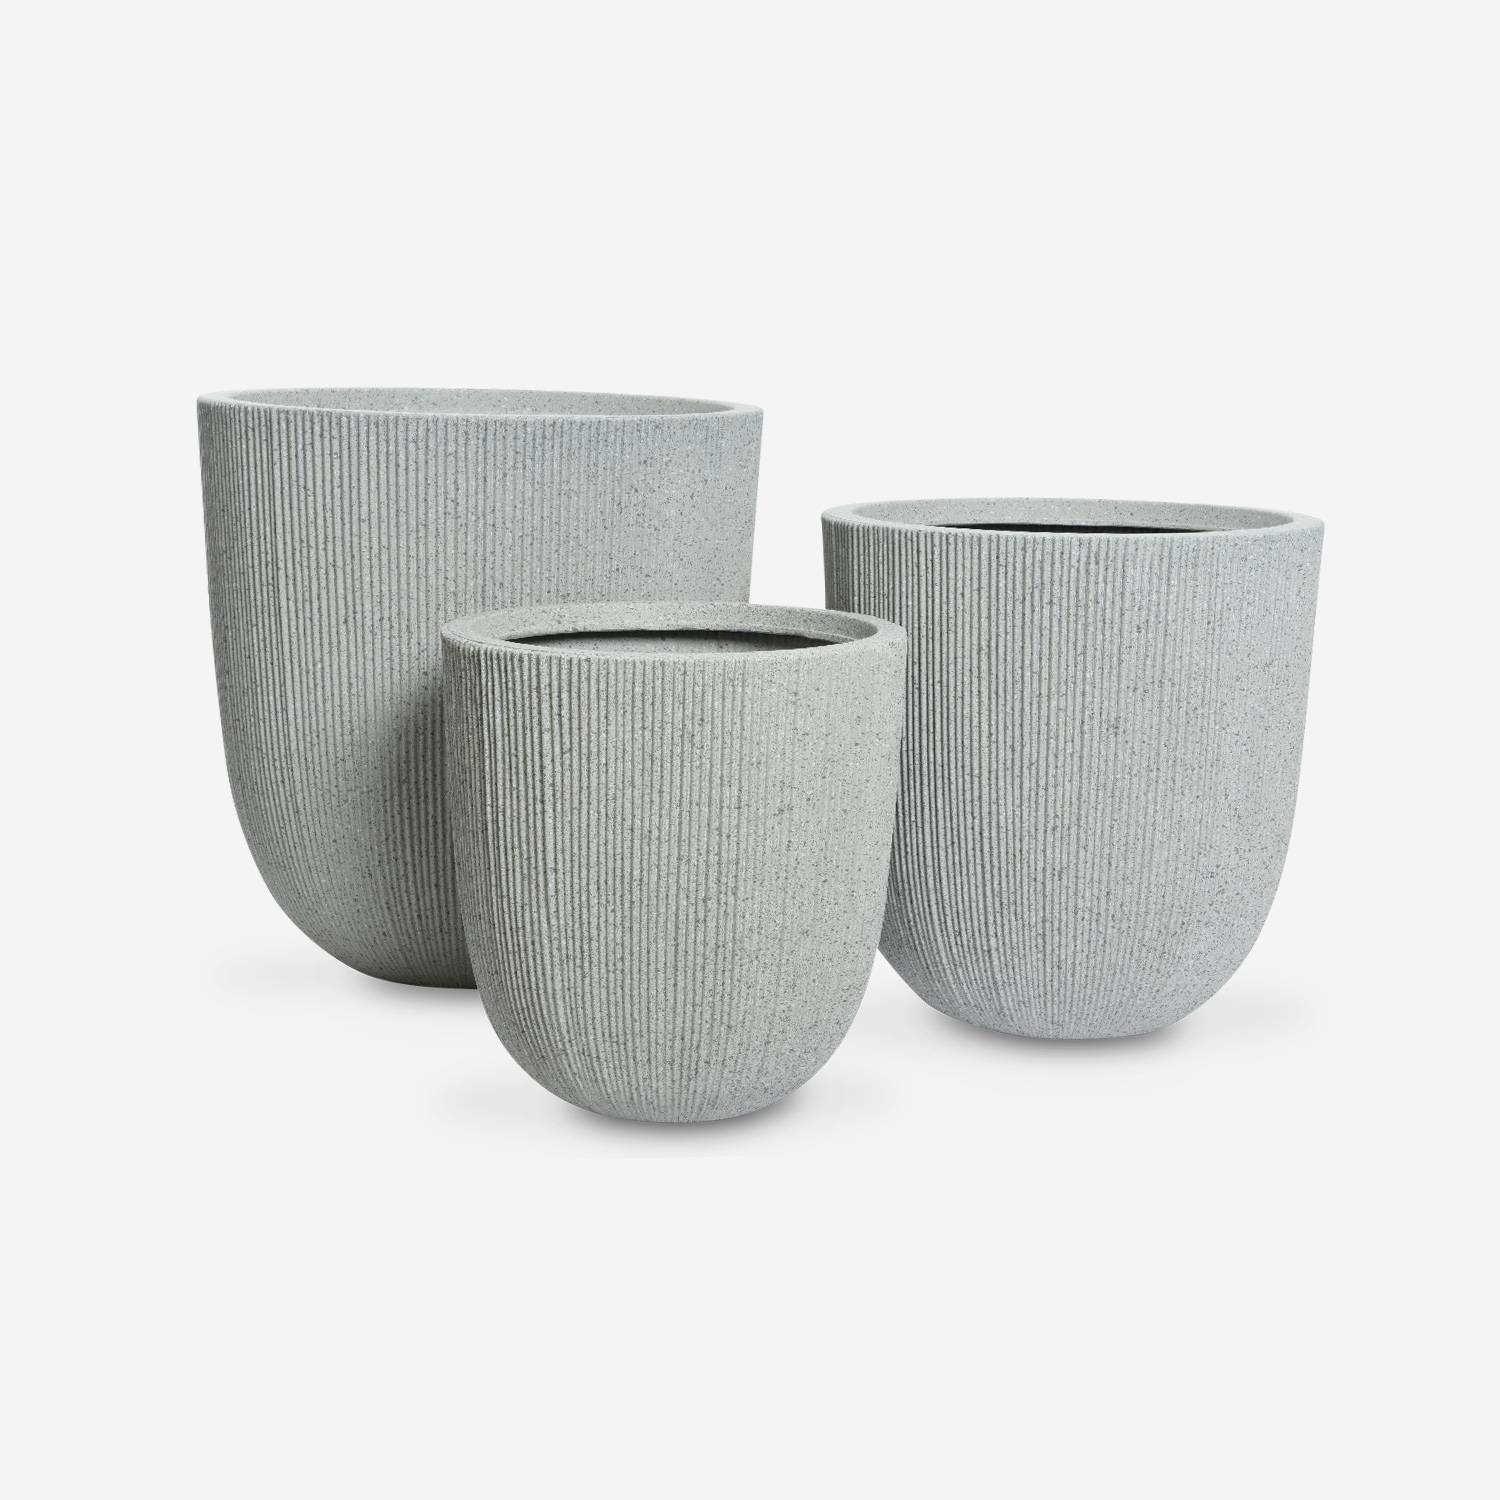 Conjunto de 3 tampas para vasos - Hibiscus - vasos de plástico, 3 tamanhos, redondos, cinzento claro, encaixáveis Photo3